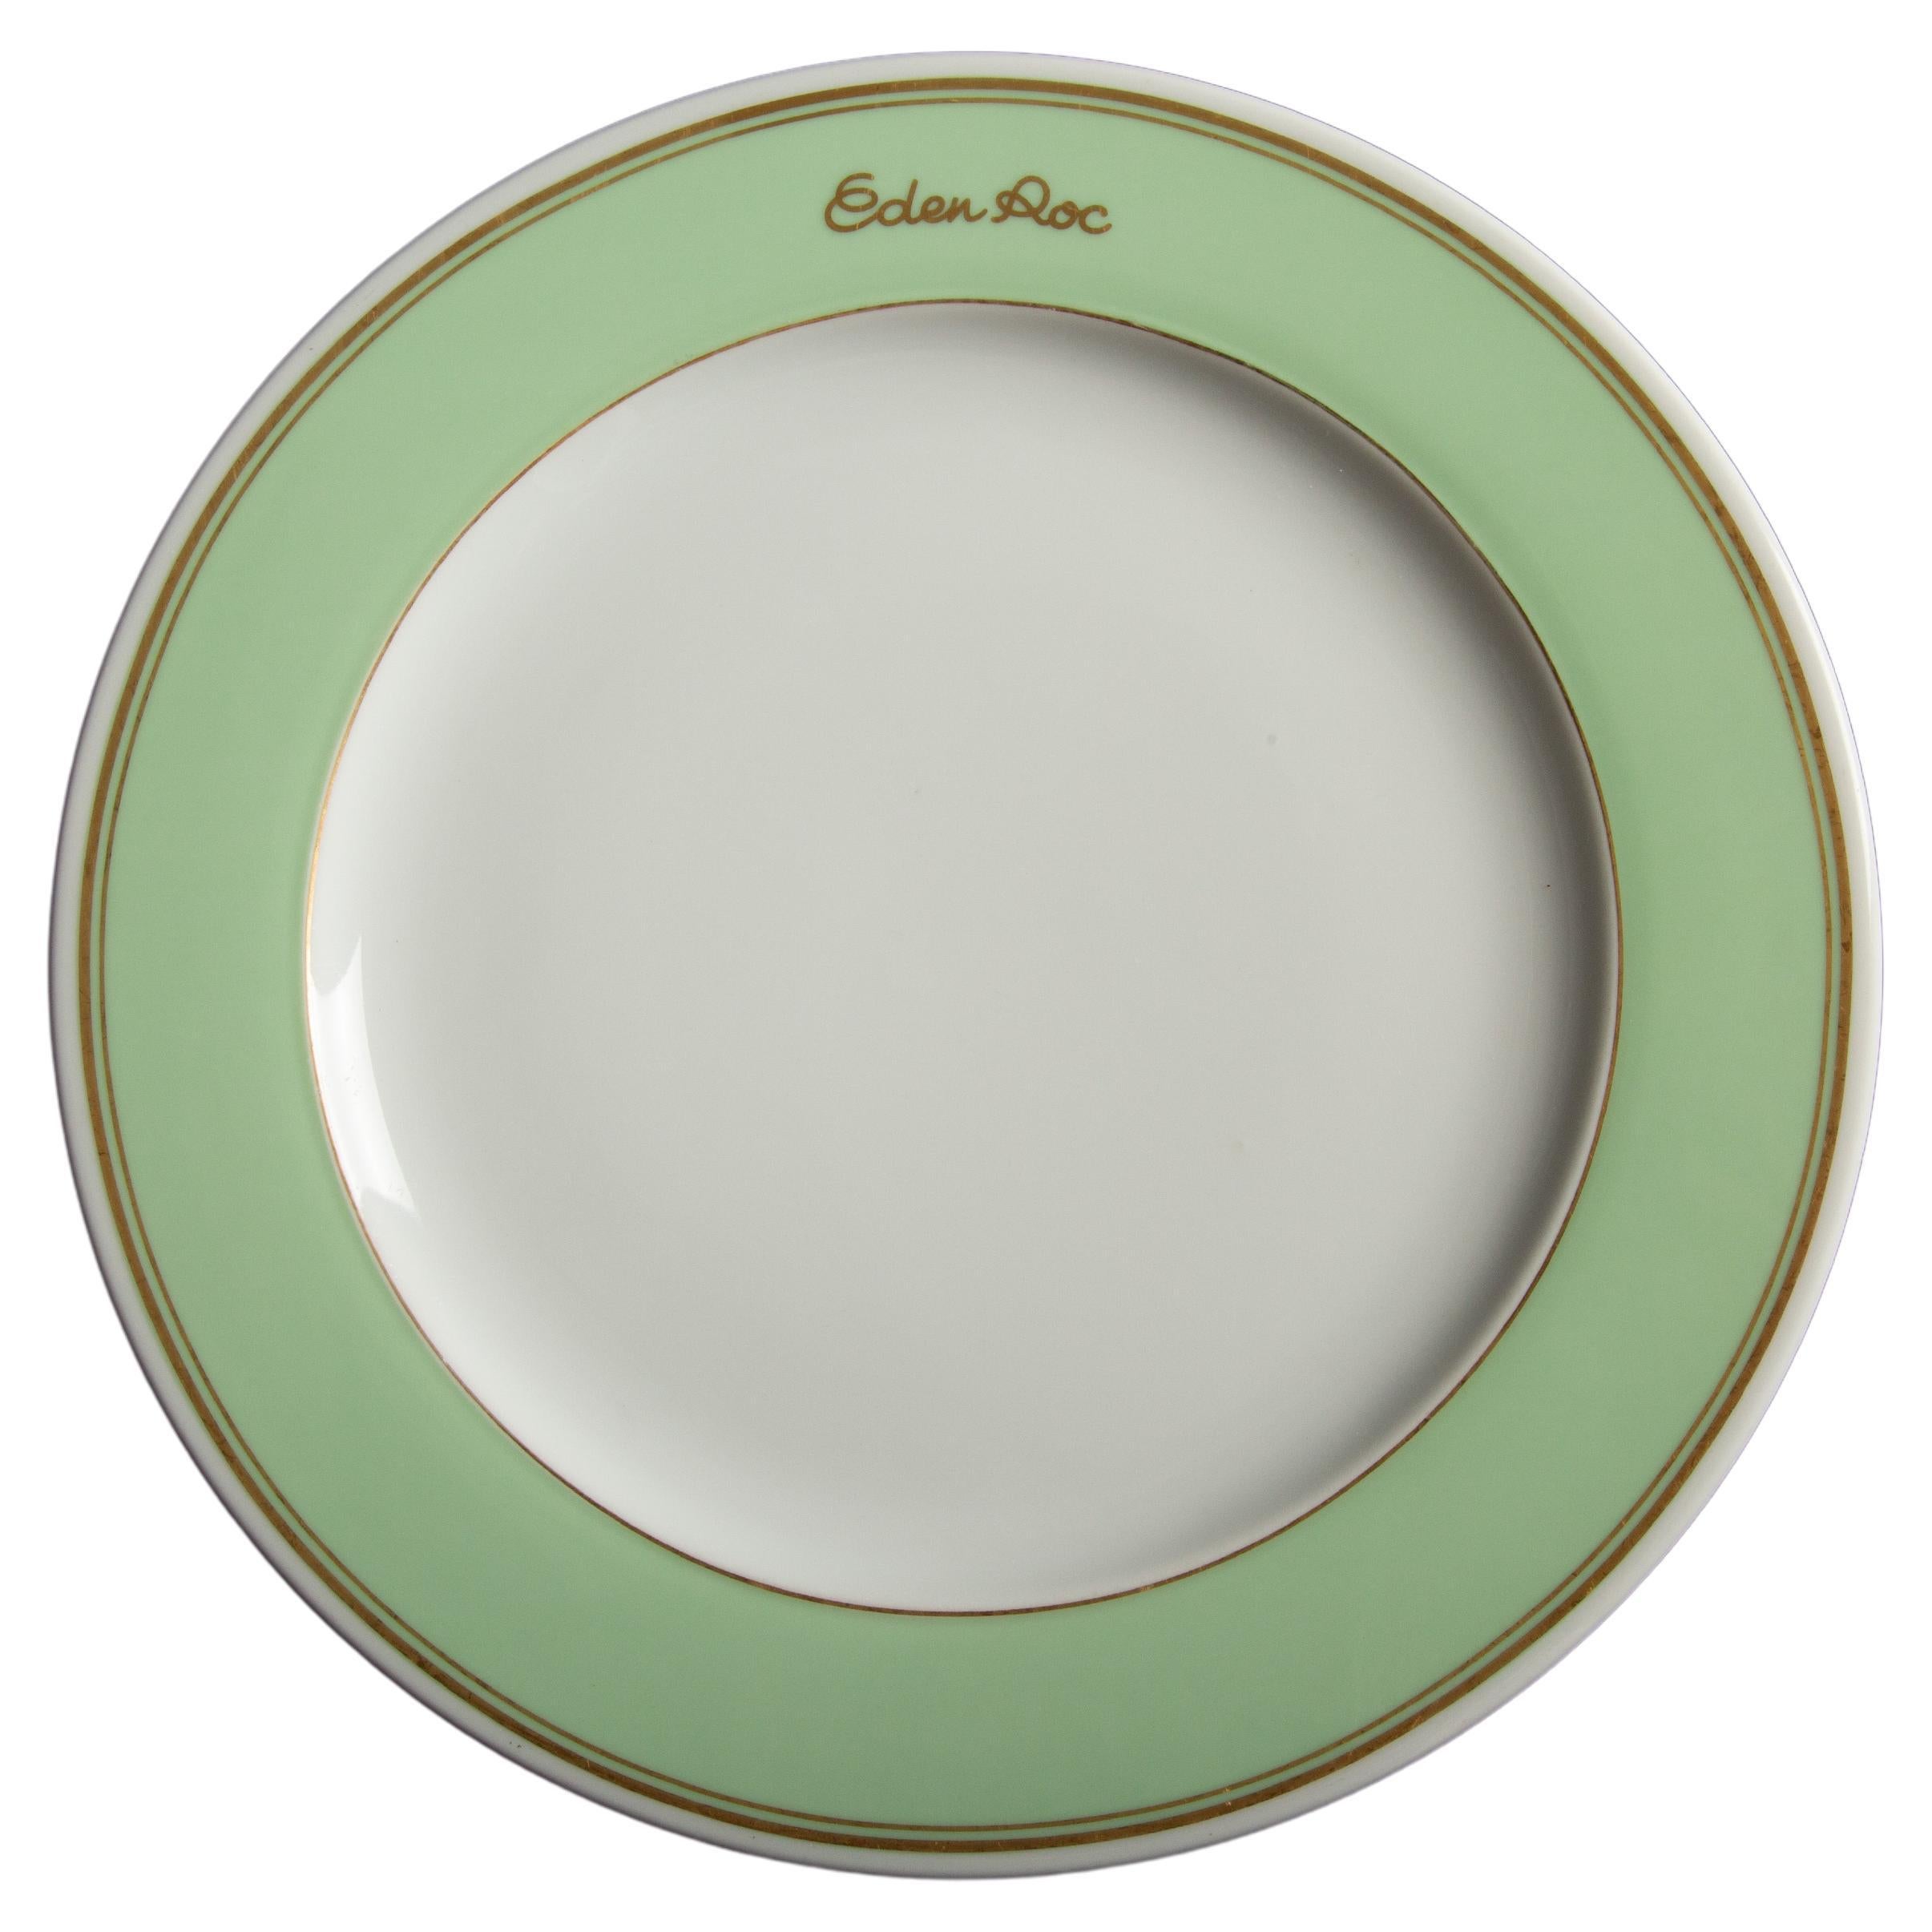 Hotel du Cap-Eden-Roc Charger/Dinner Plate: A Taste of Elegance and History 12" For Sale